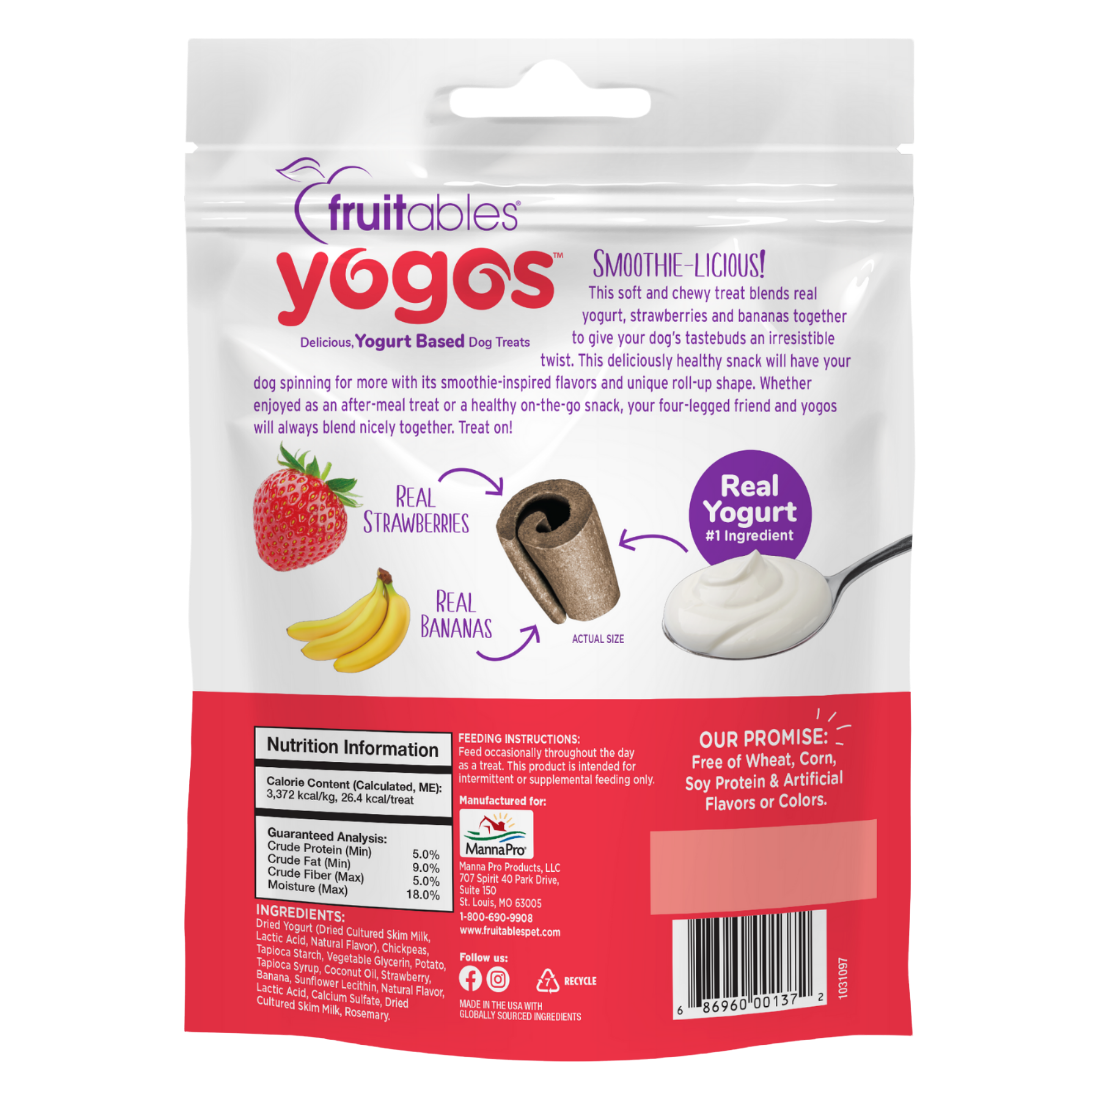 Fruitables 12 oz Yogos strawberry banana Smoothie Dog Treats back packaging